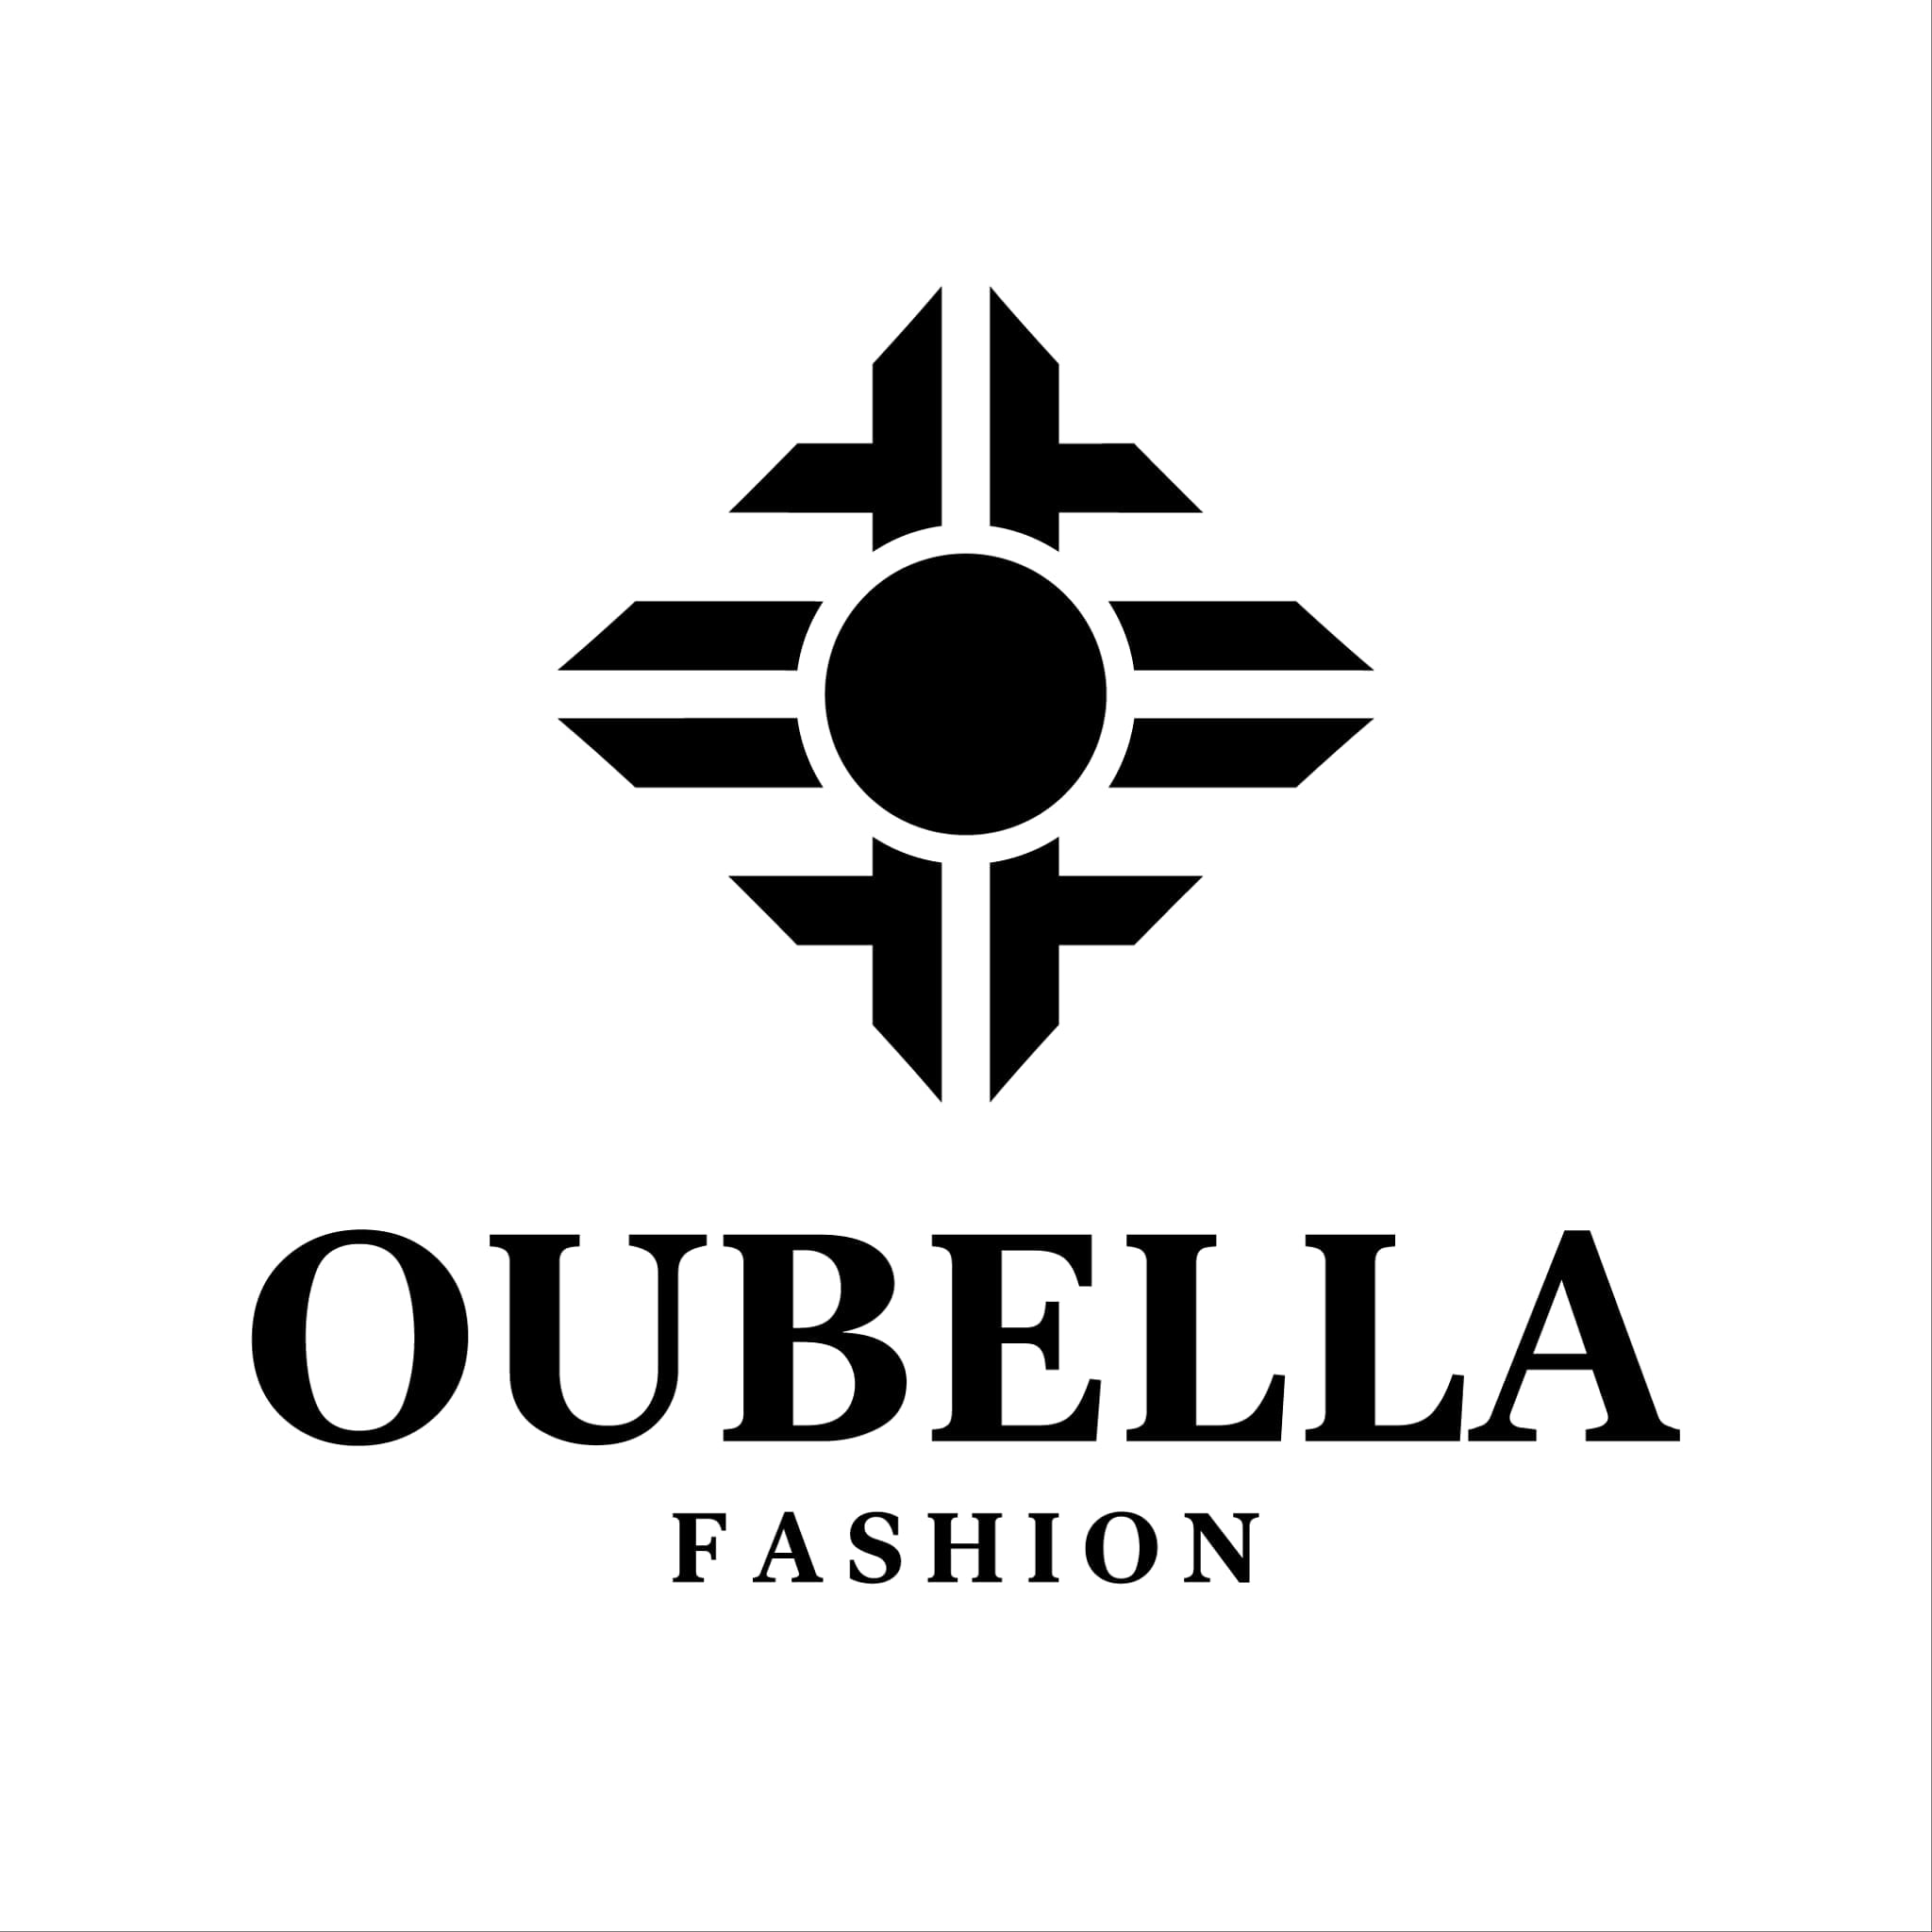 Oubella Fashion